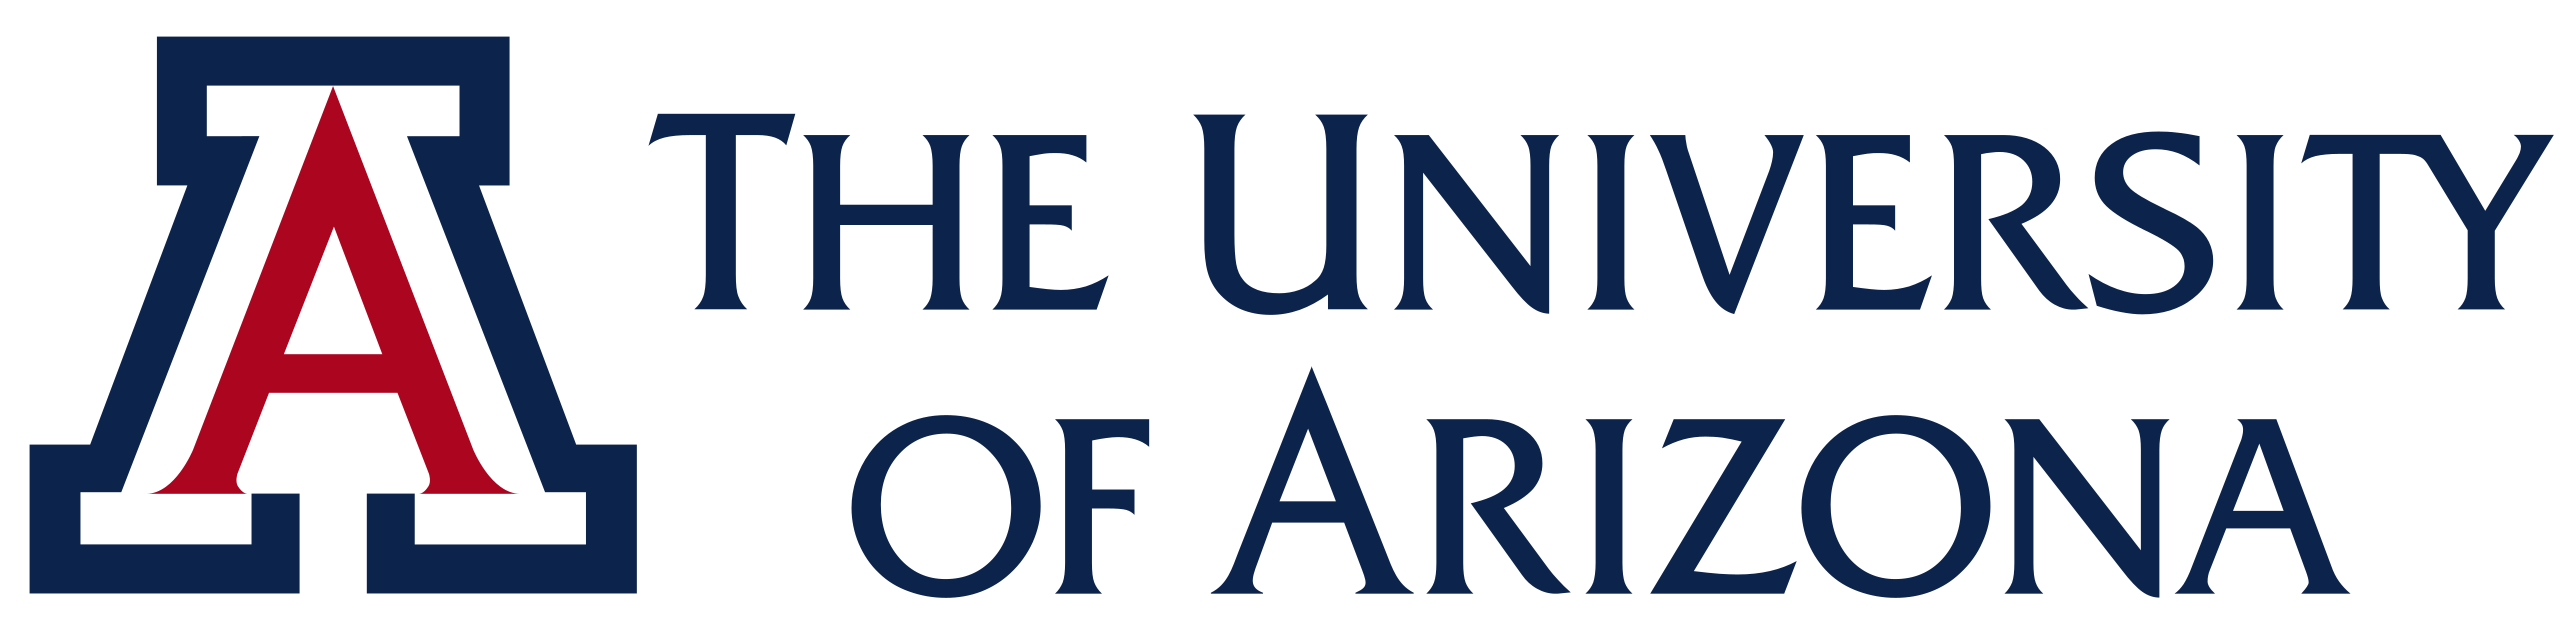 University_of_Arizona